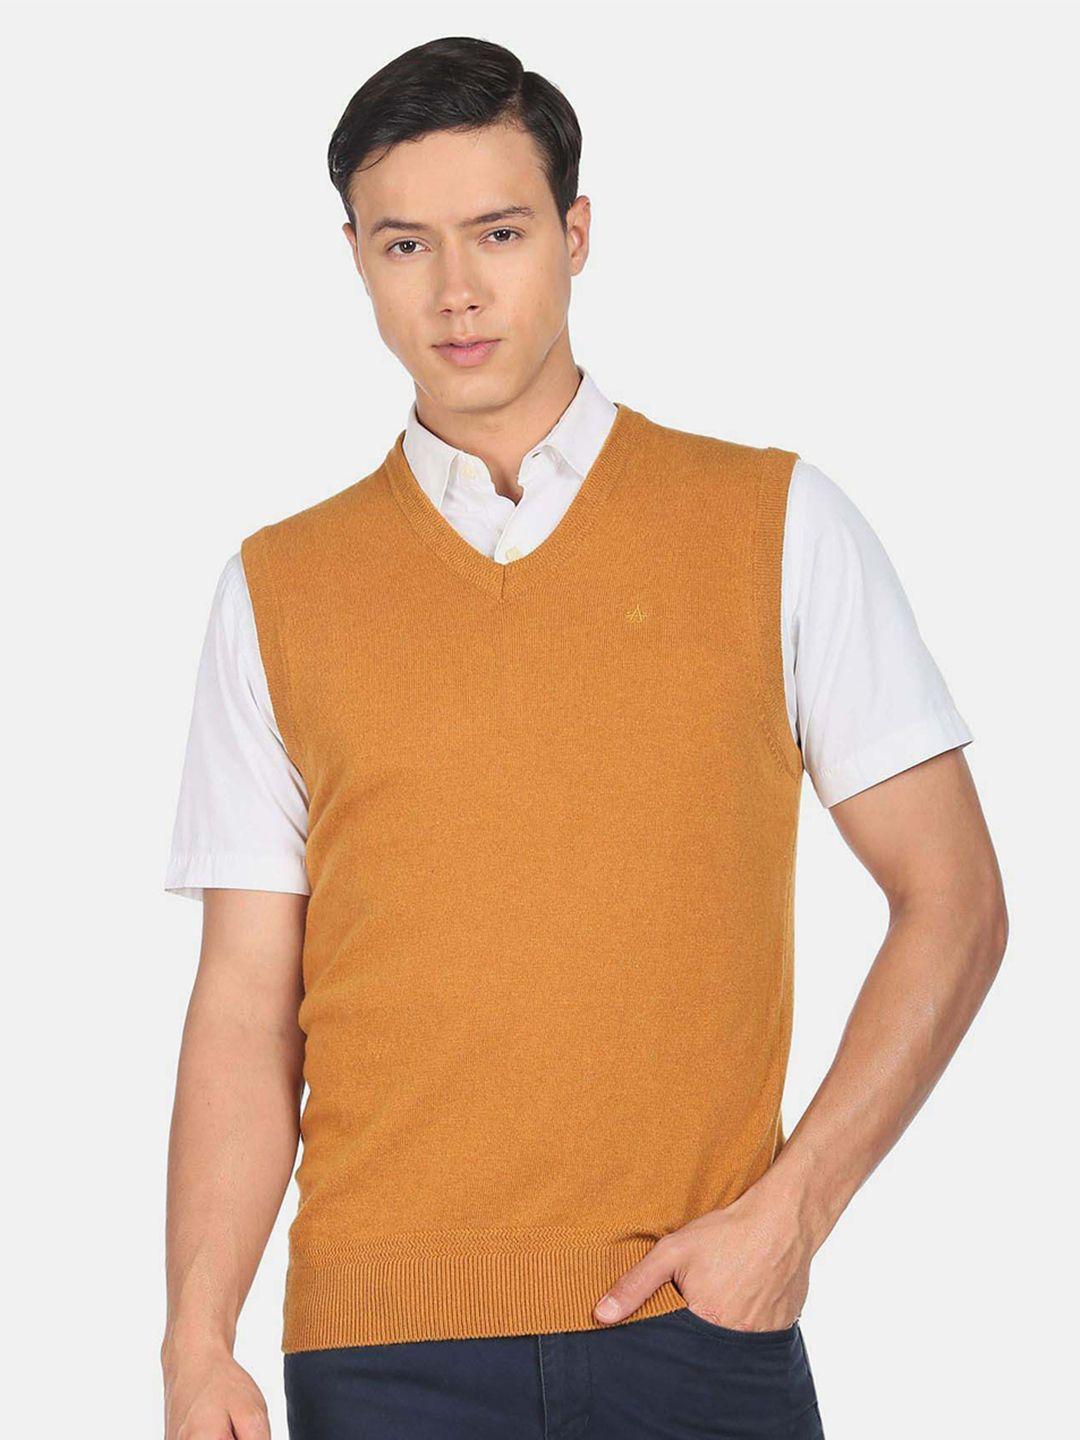 arrow-sport-v-neck-sleeveless-sweater-vest